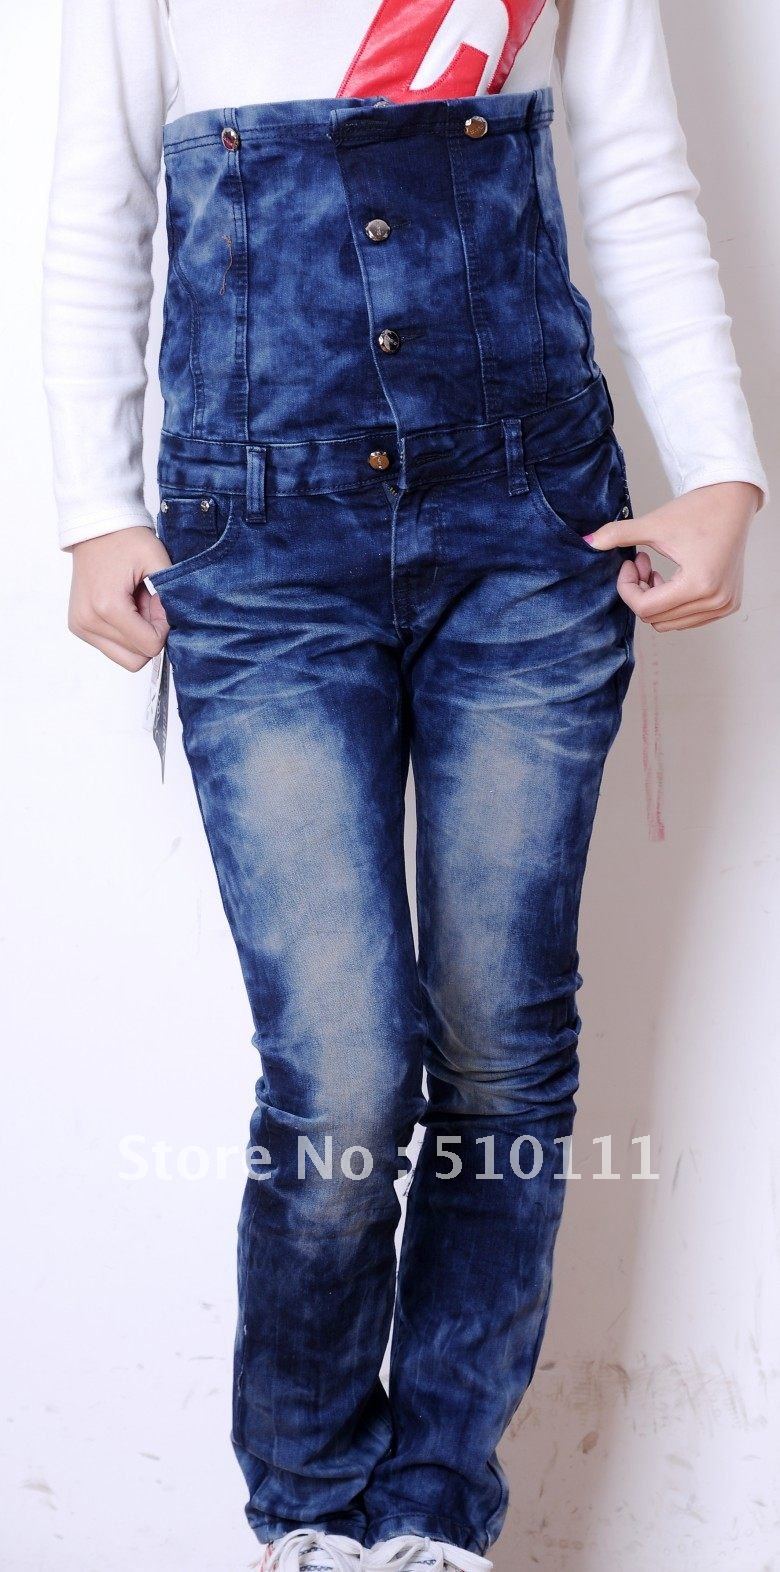 Free Shipping new design women's jeans brand jeans, Pencil Pants,Lady's Long Jeans,Denim Trousers,Blue #8816